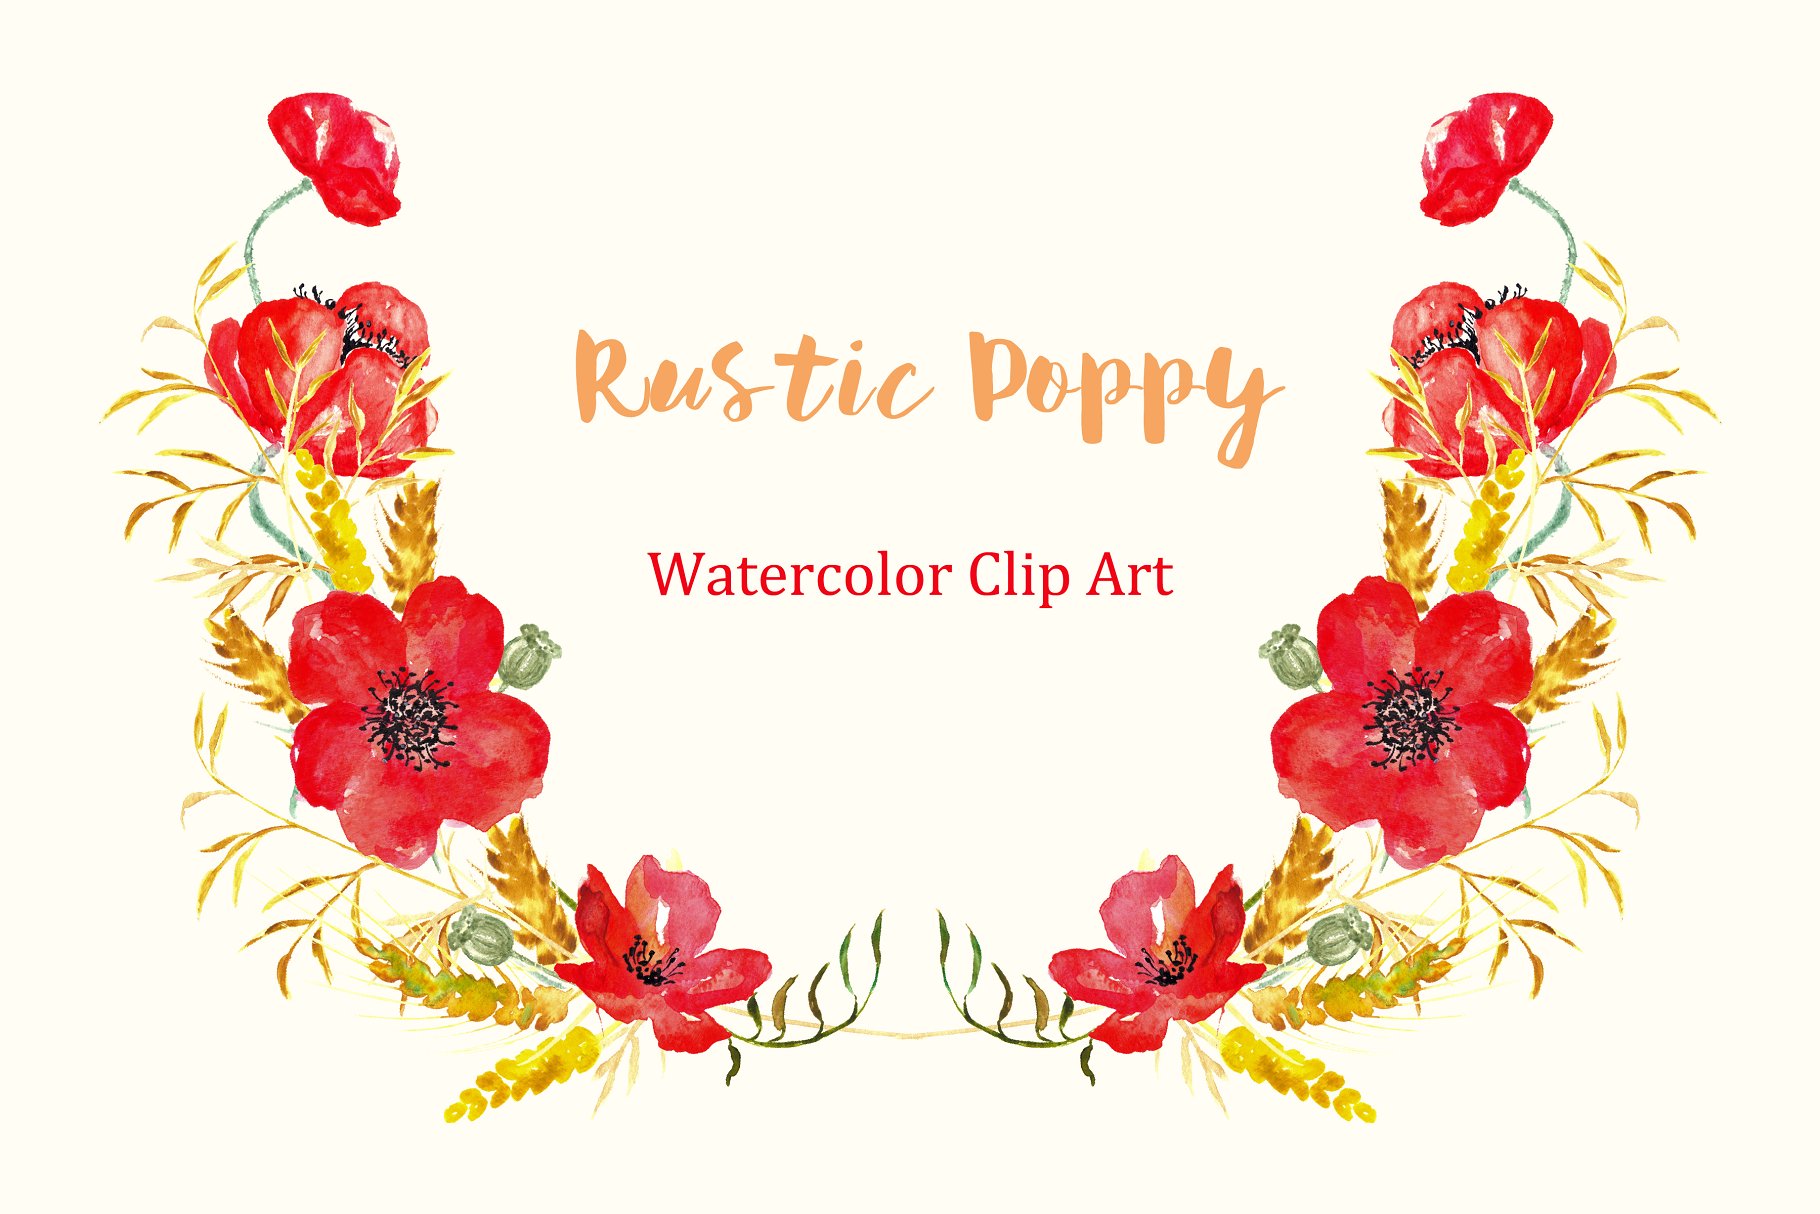 夏季乡村浪漫罂粟剪贴画 Ructic Poppy watercolor Clipart插图(2)